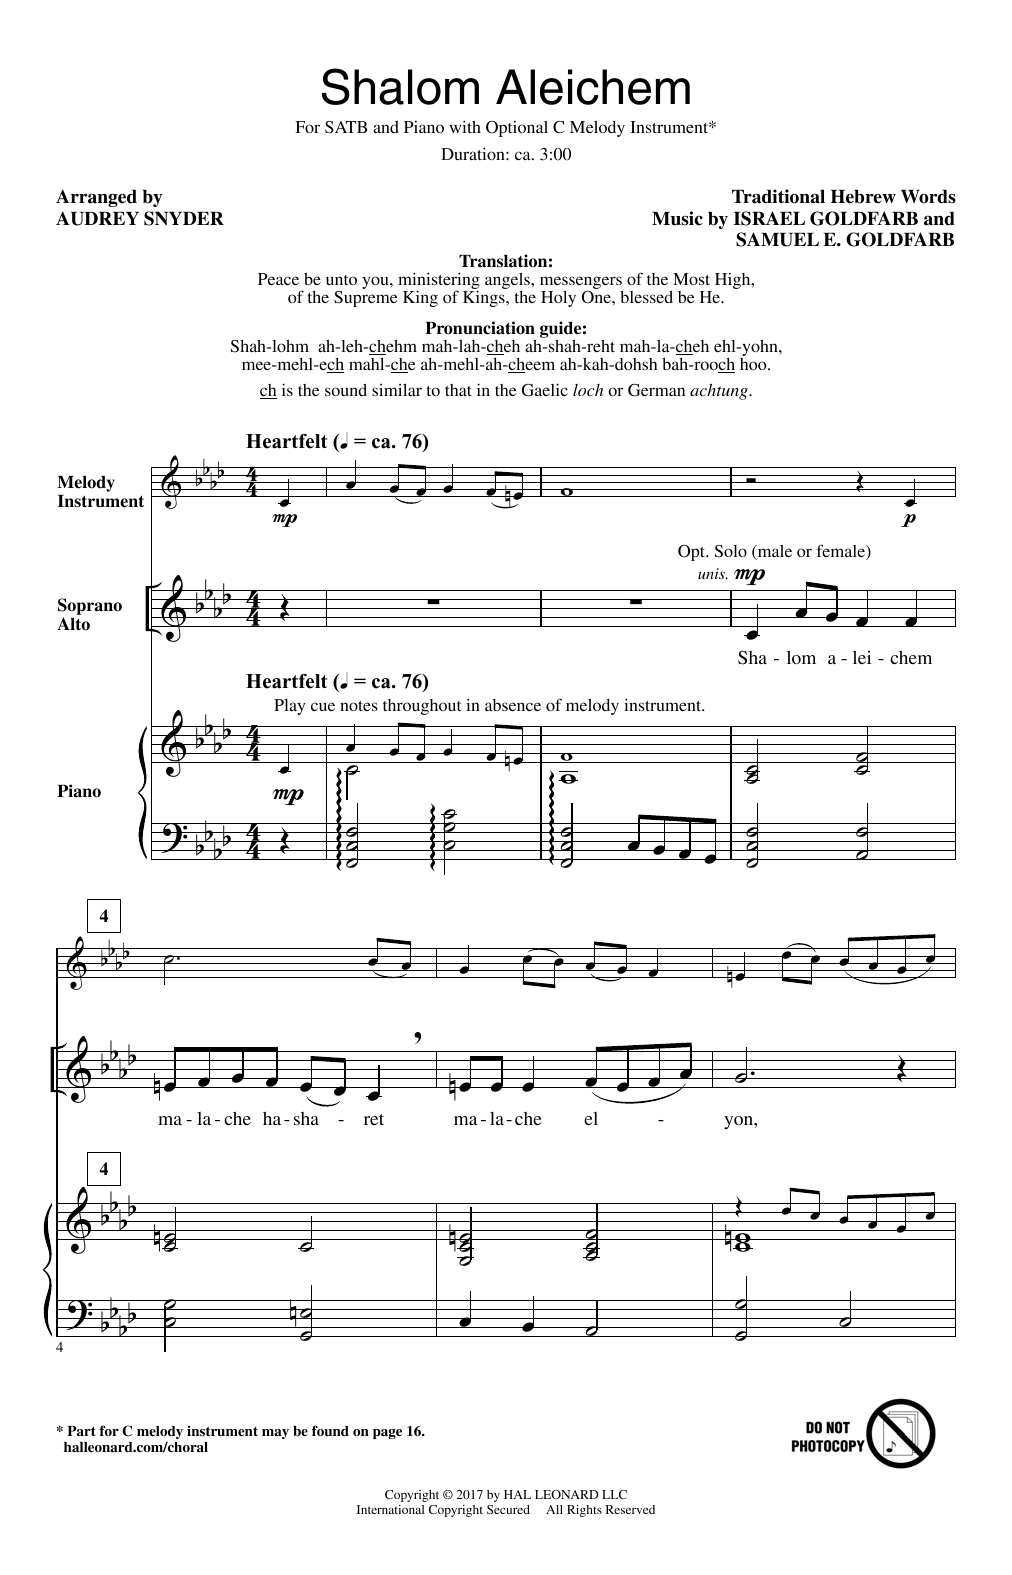 Audrey Snyder Shalom Aleichem Sheet Music Notes & Chords for SATB - Download or Print PDF